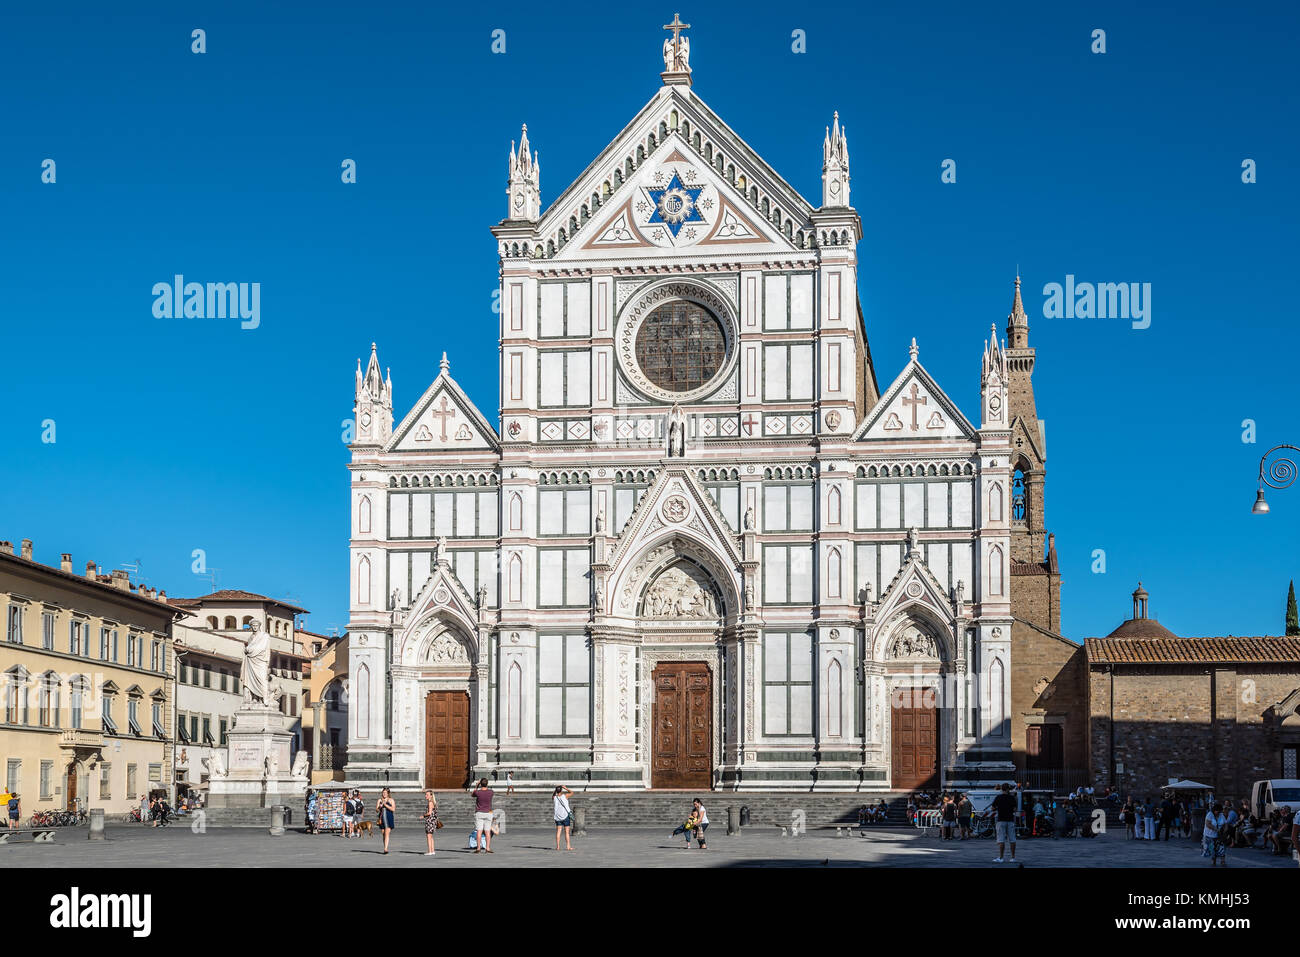 Basilica di Santa Croce in Florence Stock Photo - Alamy